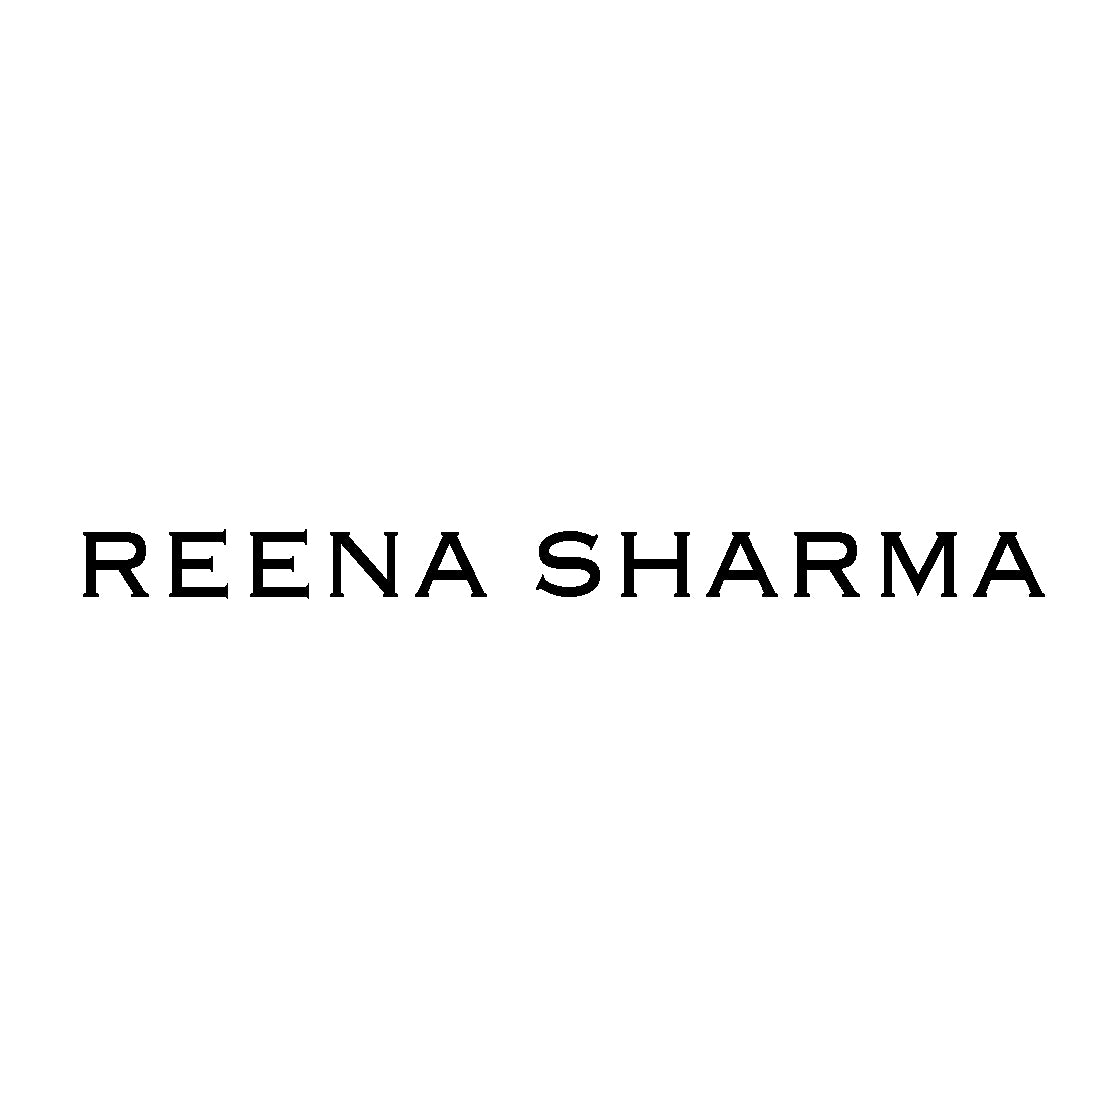 Reena Sharma